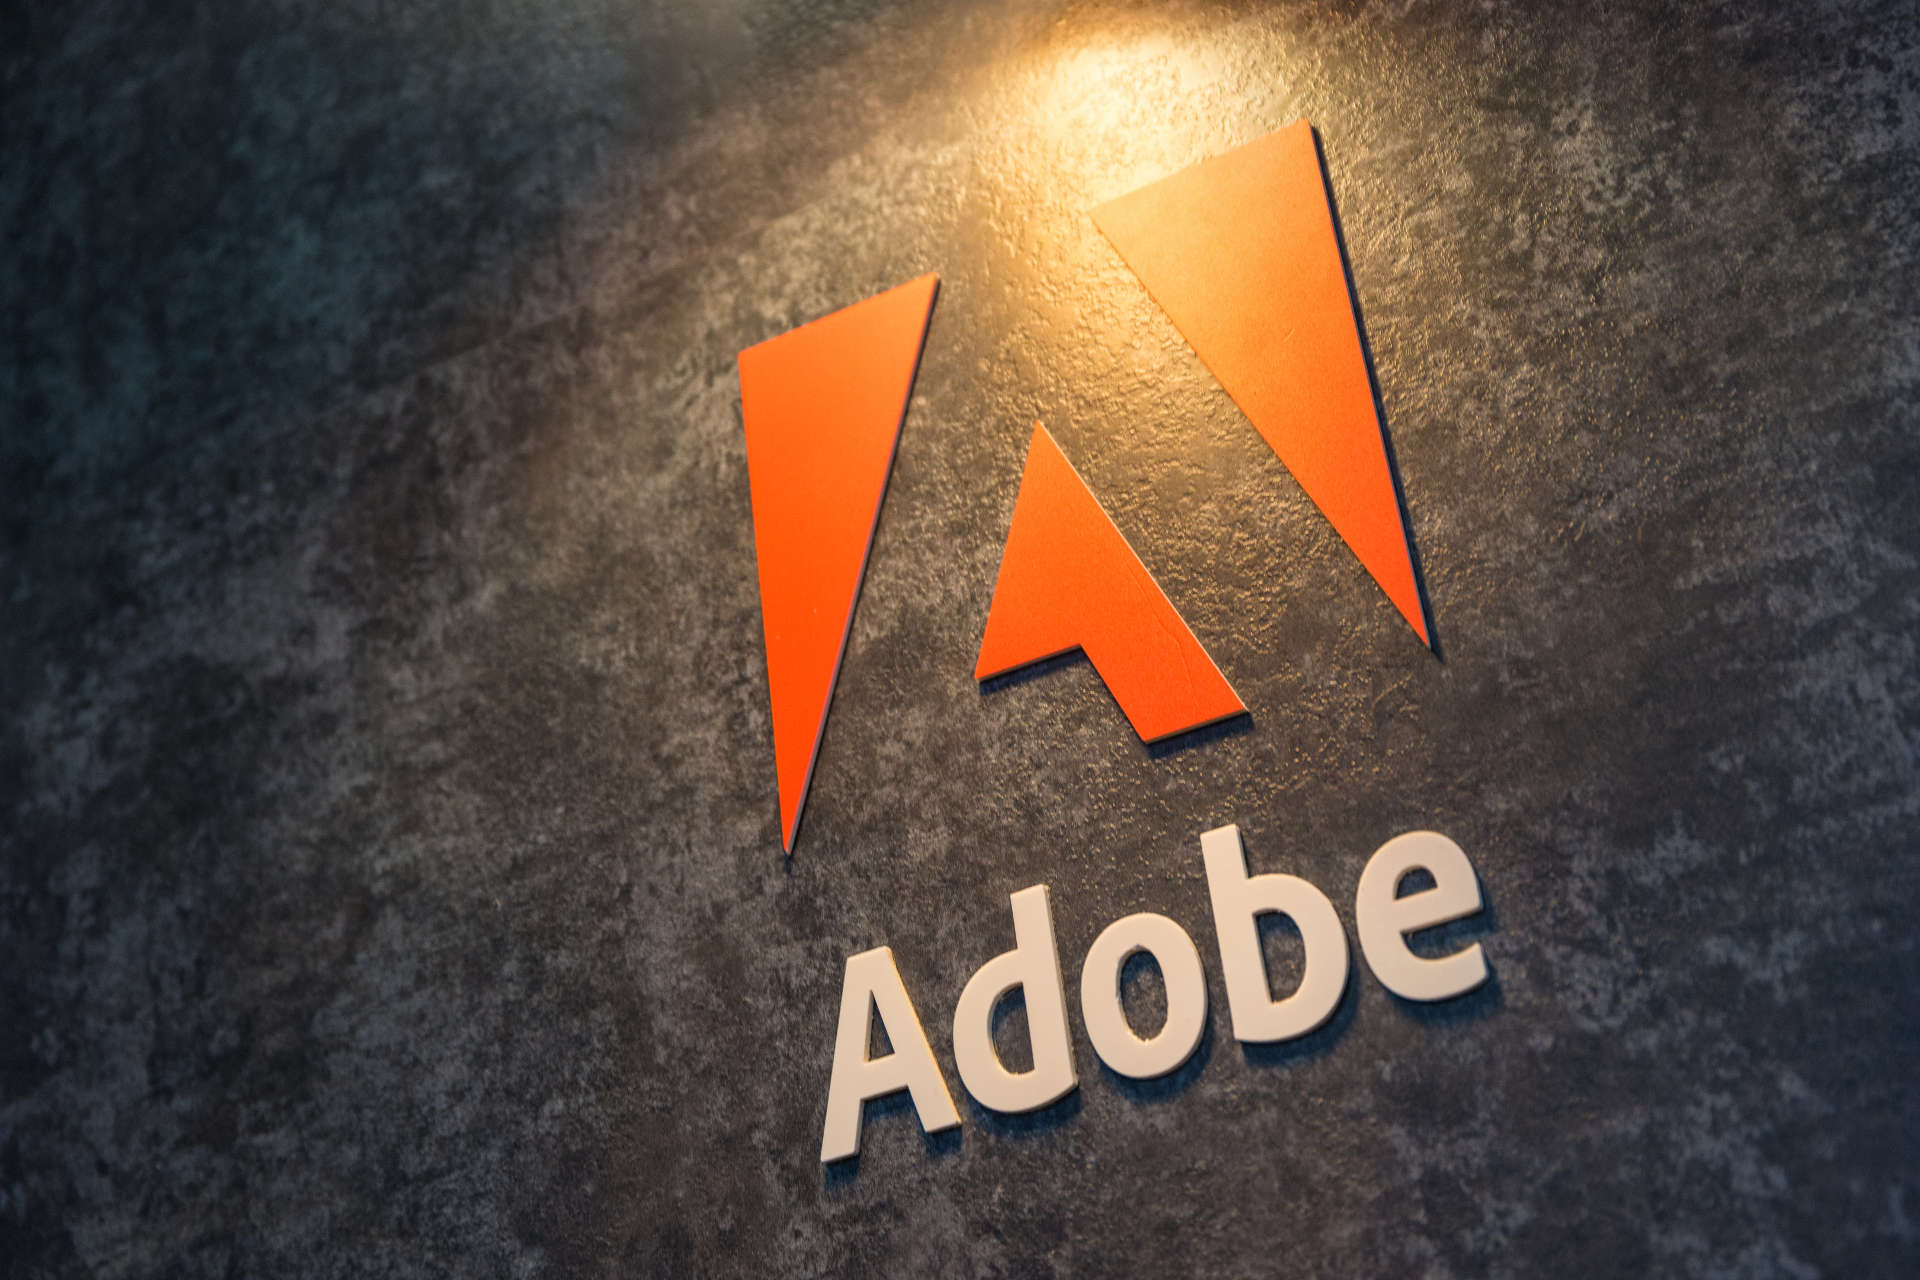 Adobe share price